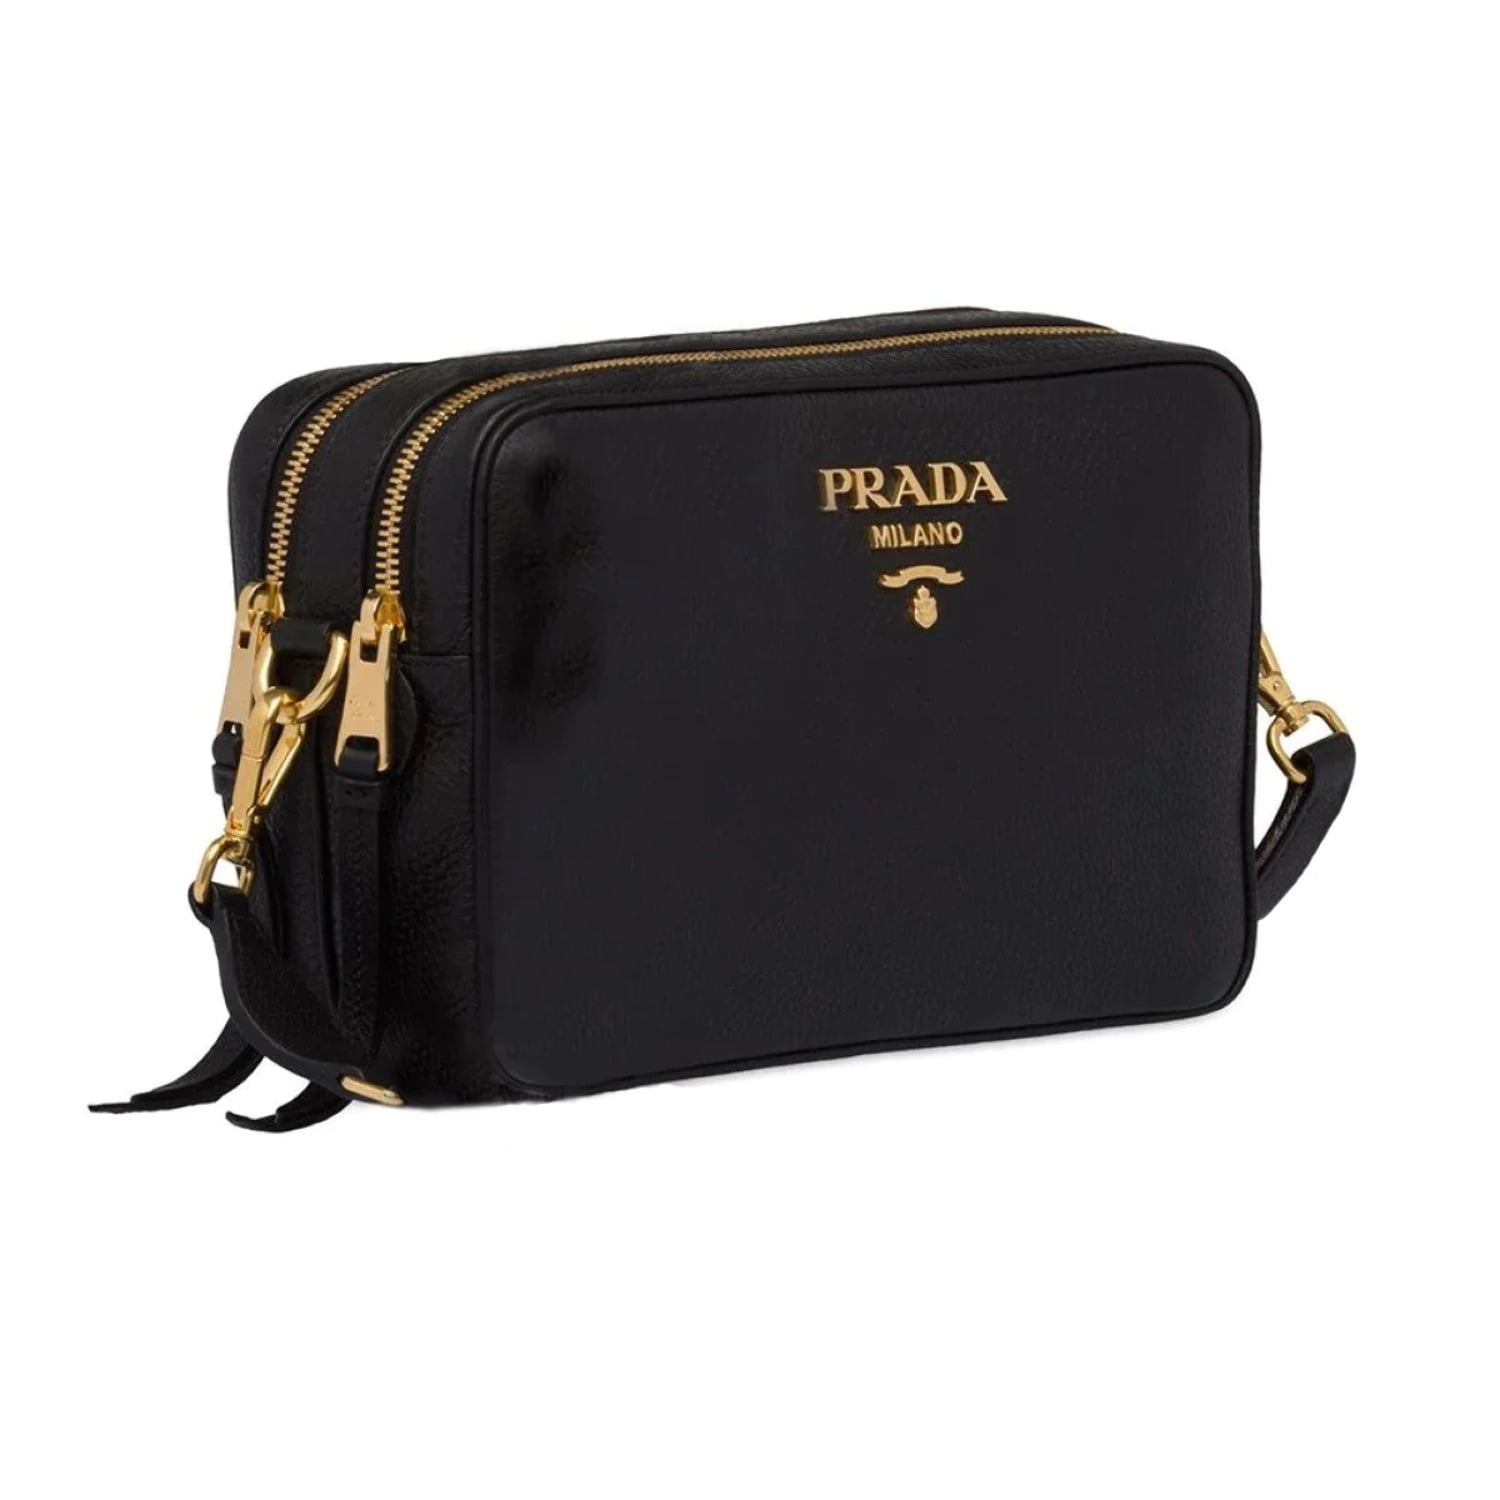 Prada - From November 5th to January 9th, #Prada presents